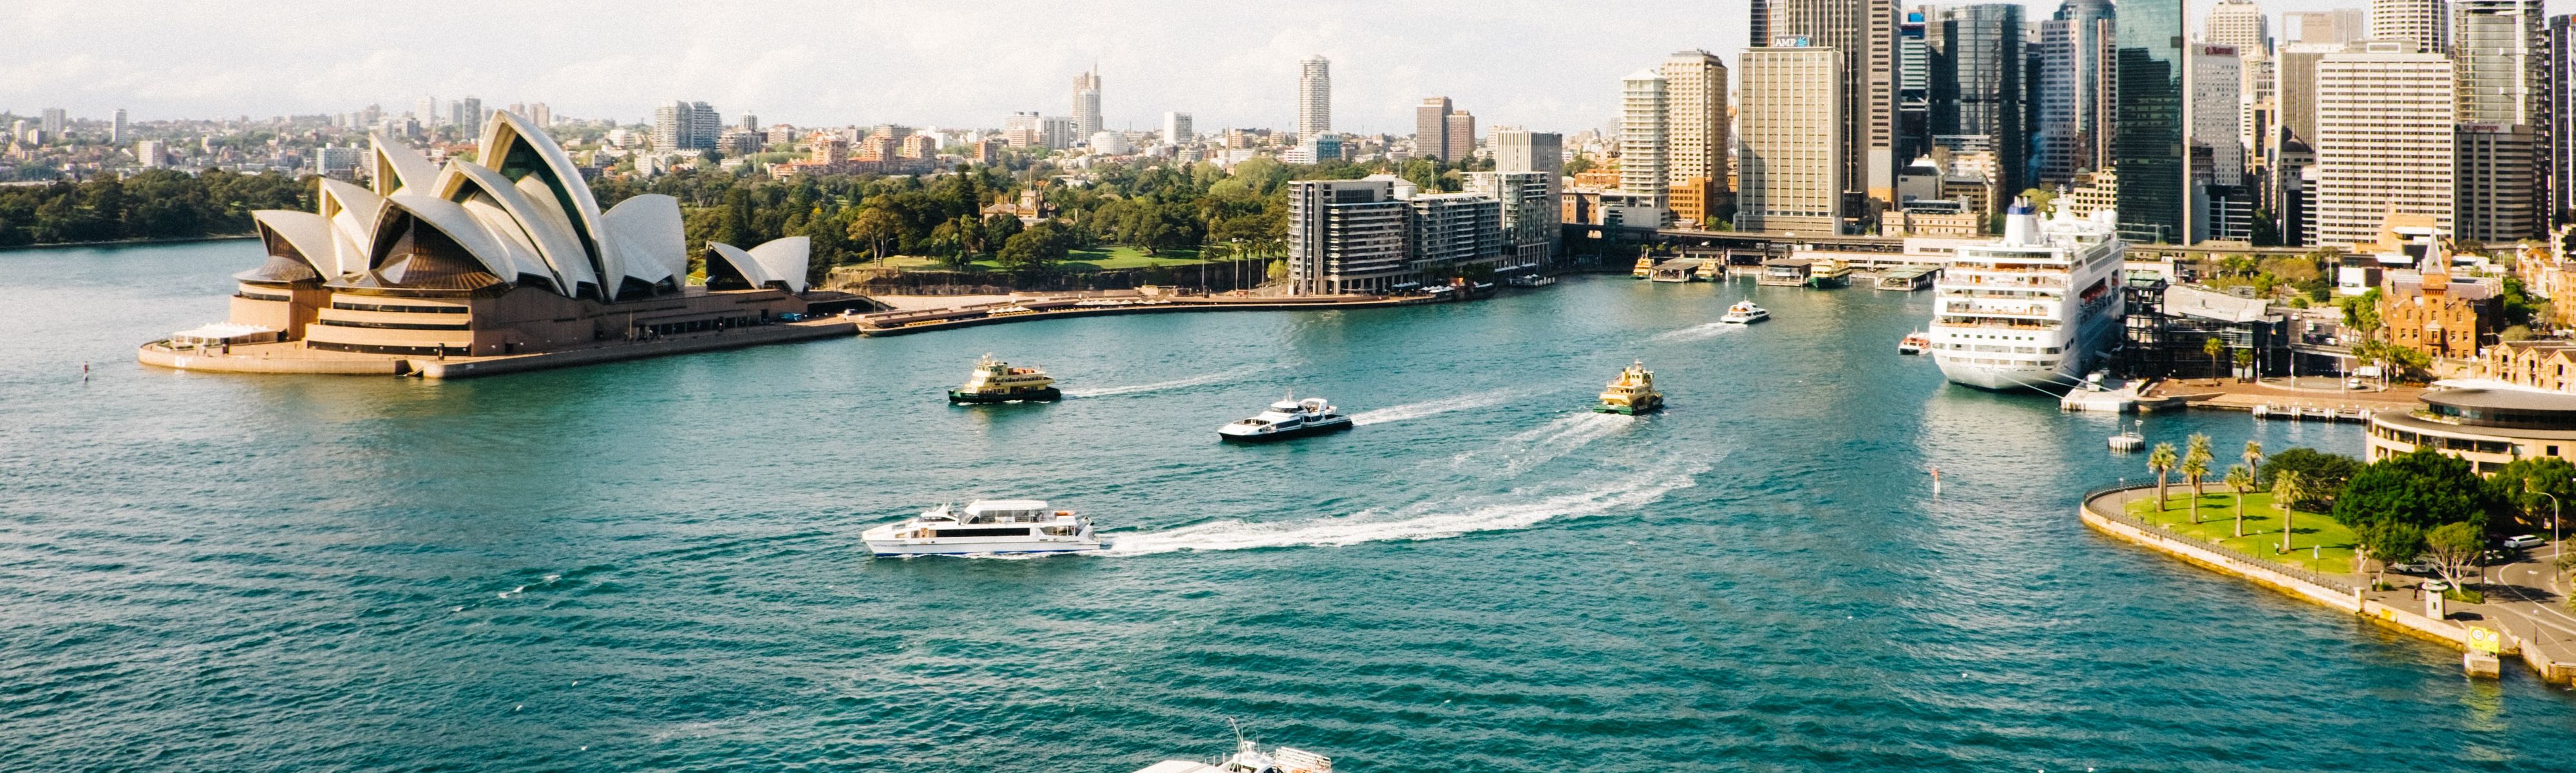 boats riding through water near opera house in sydney australia